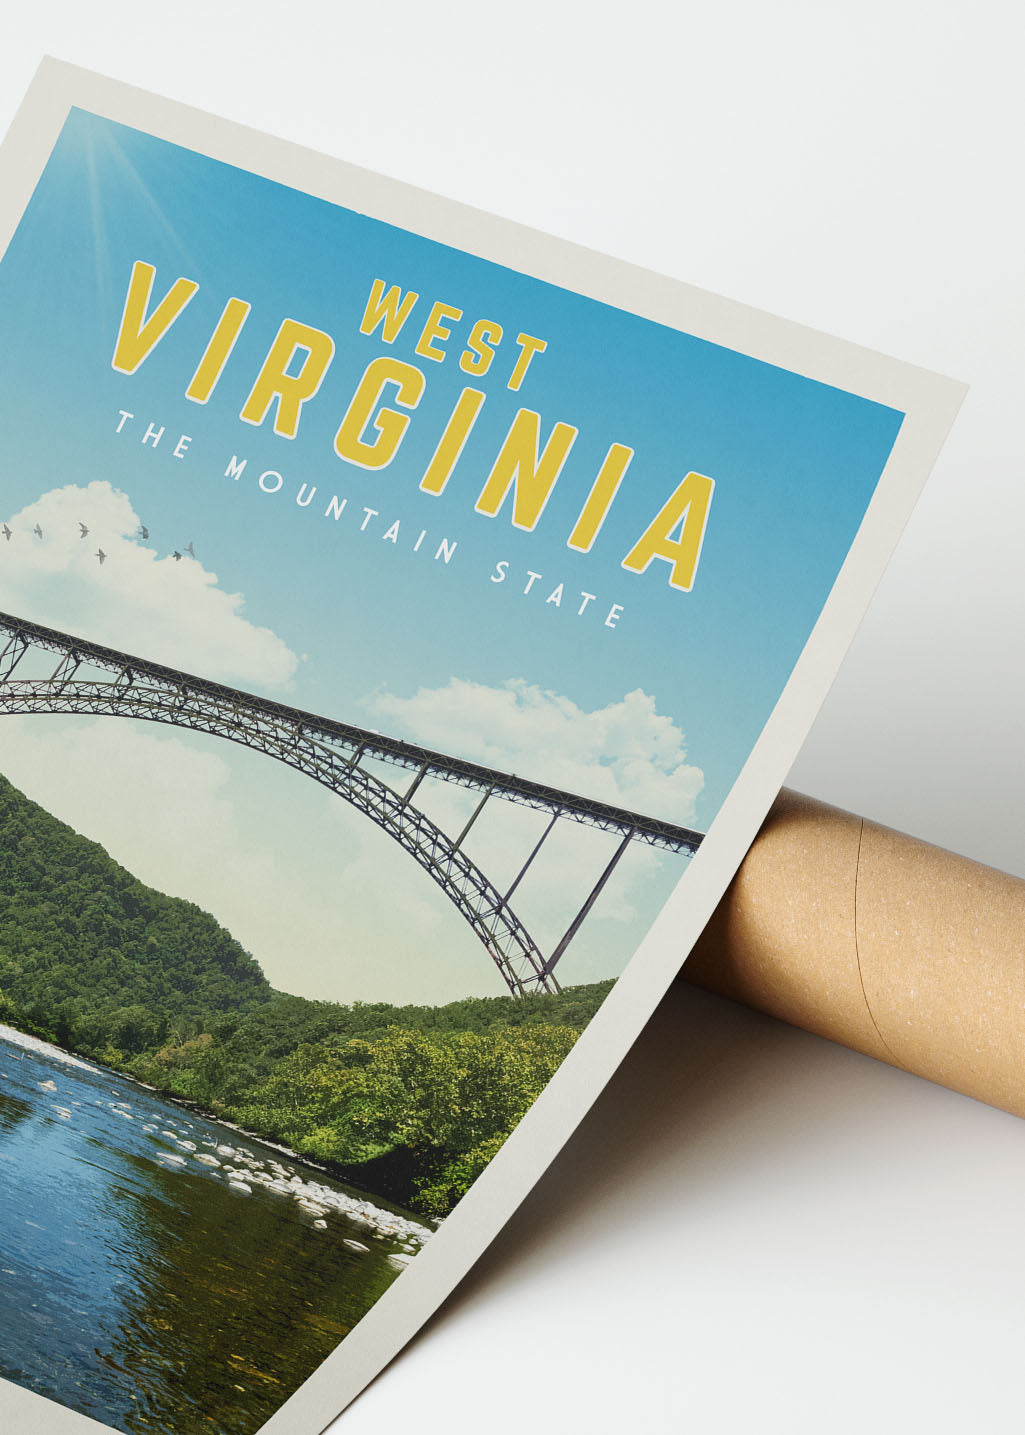 West Virginia - Vintage Travel Poster